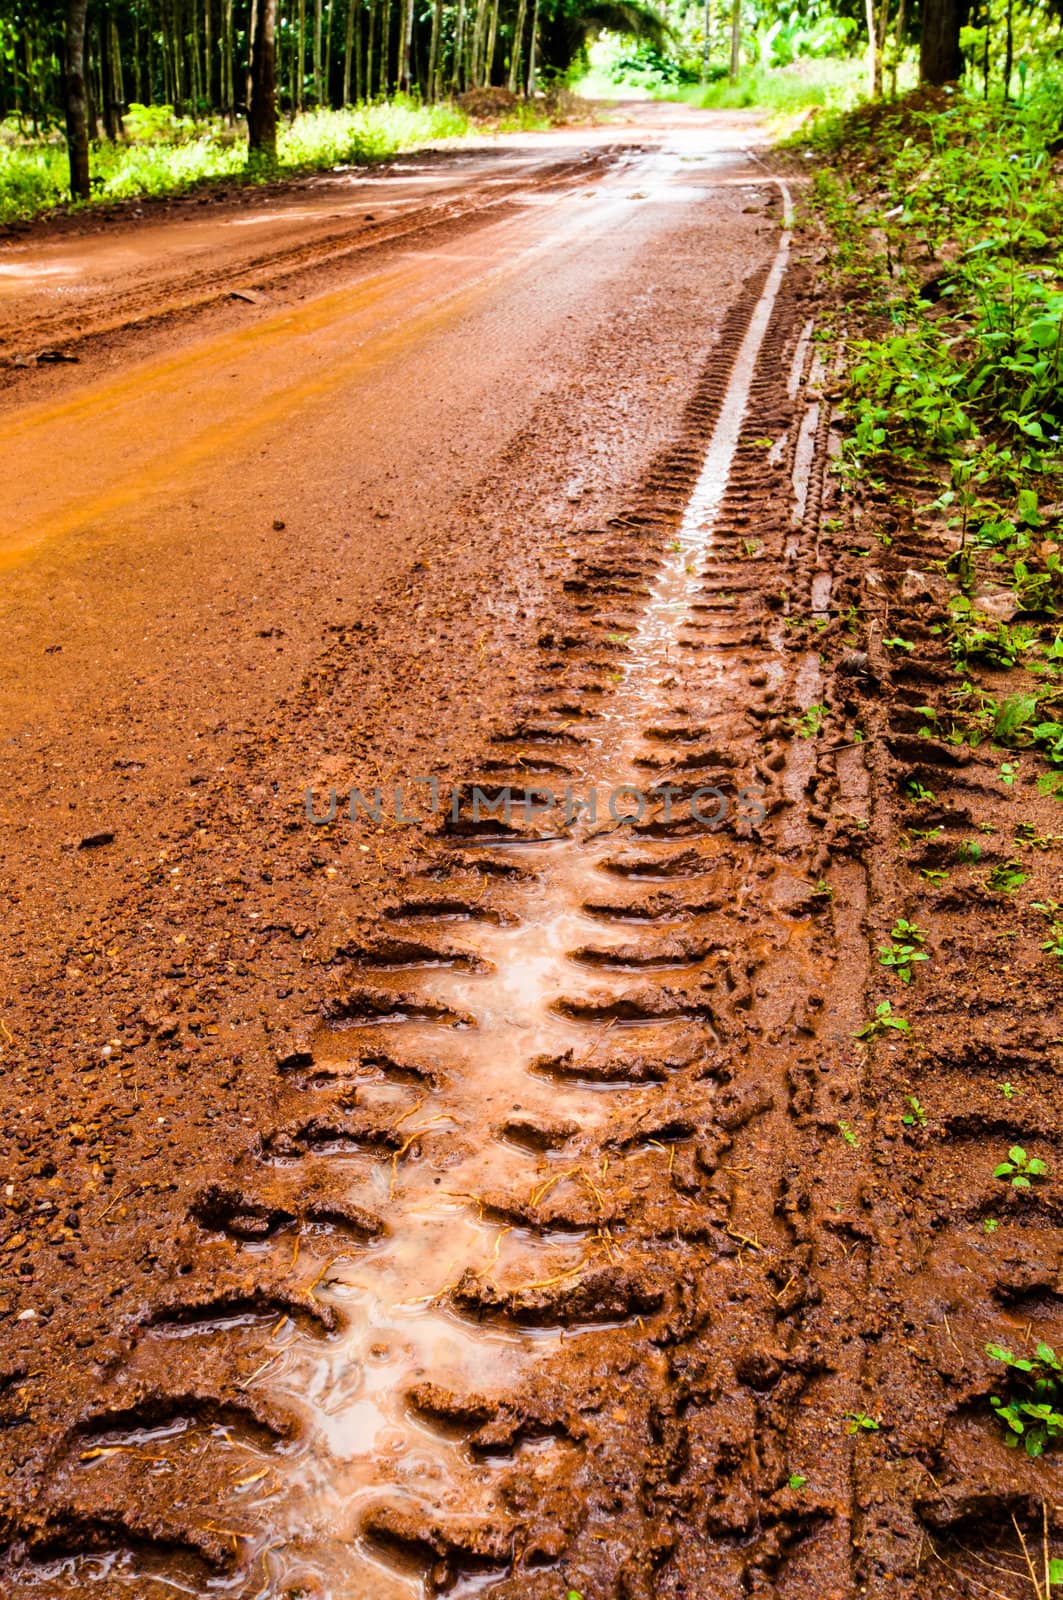 Mud Road trough rubber plantation by TanawatPontchour